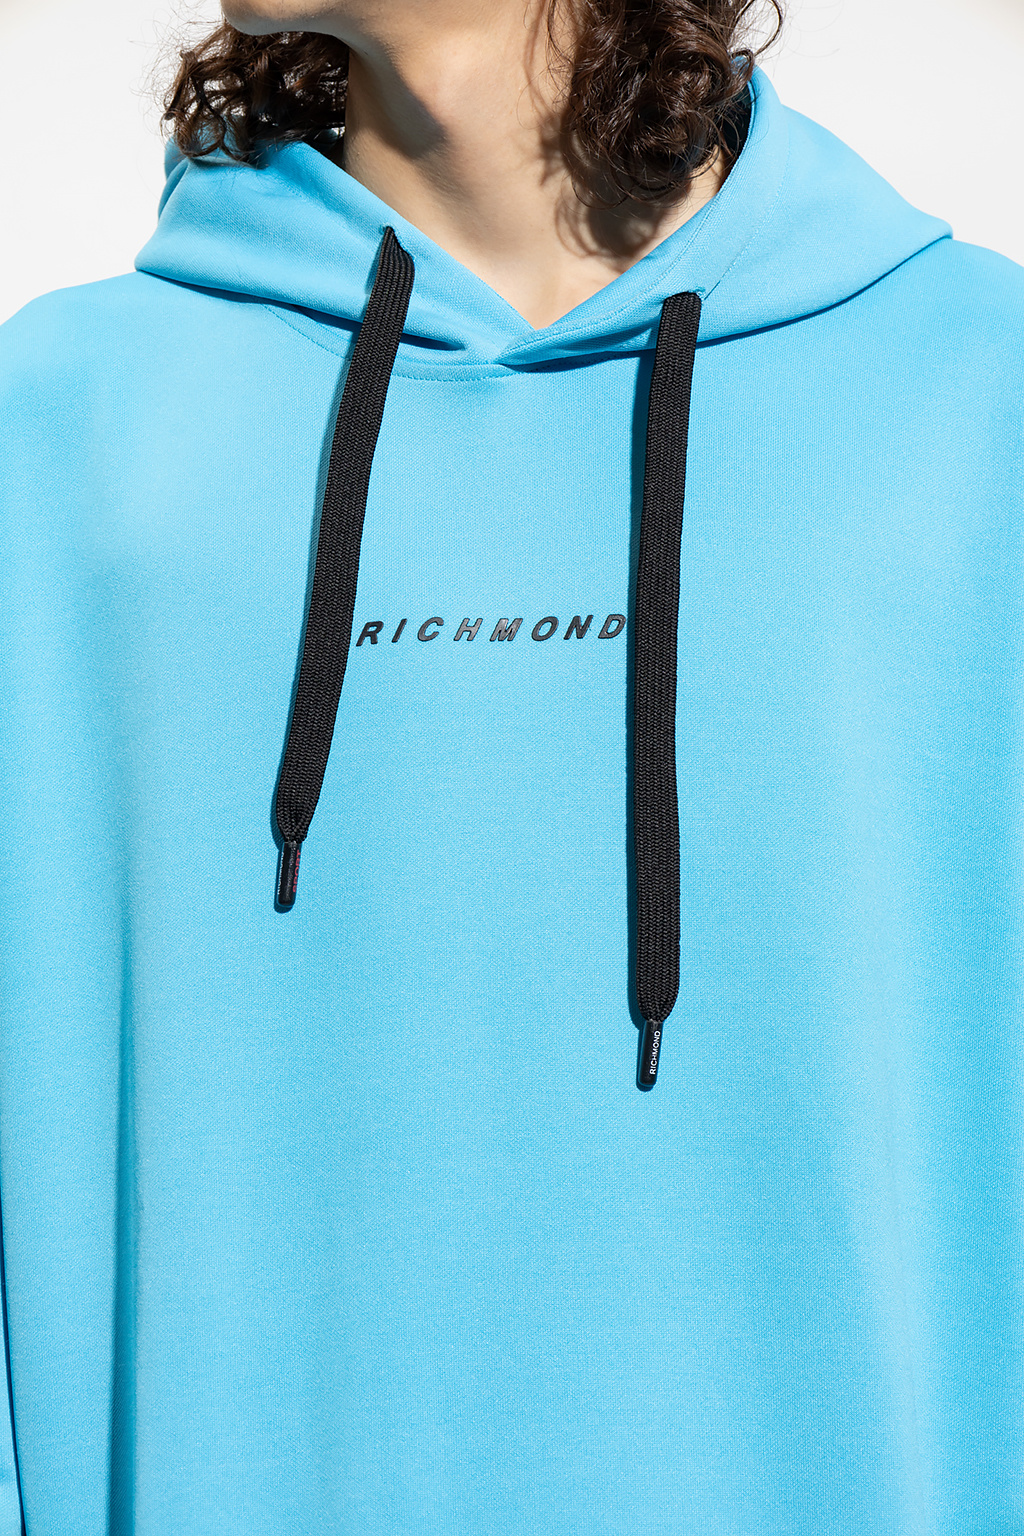 John Richmond Nike hoodie with logo